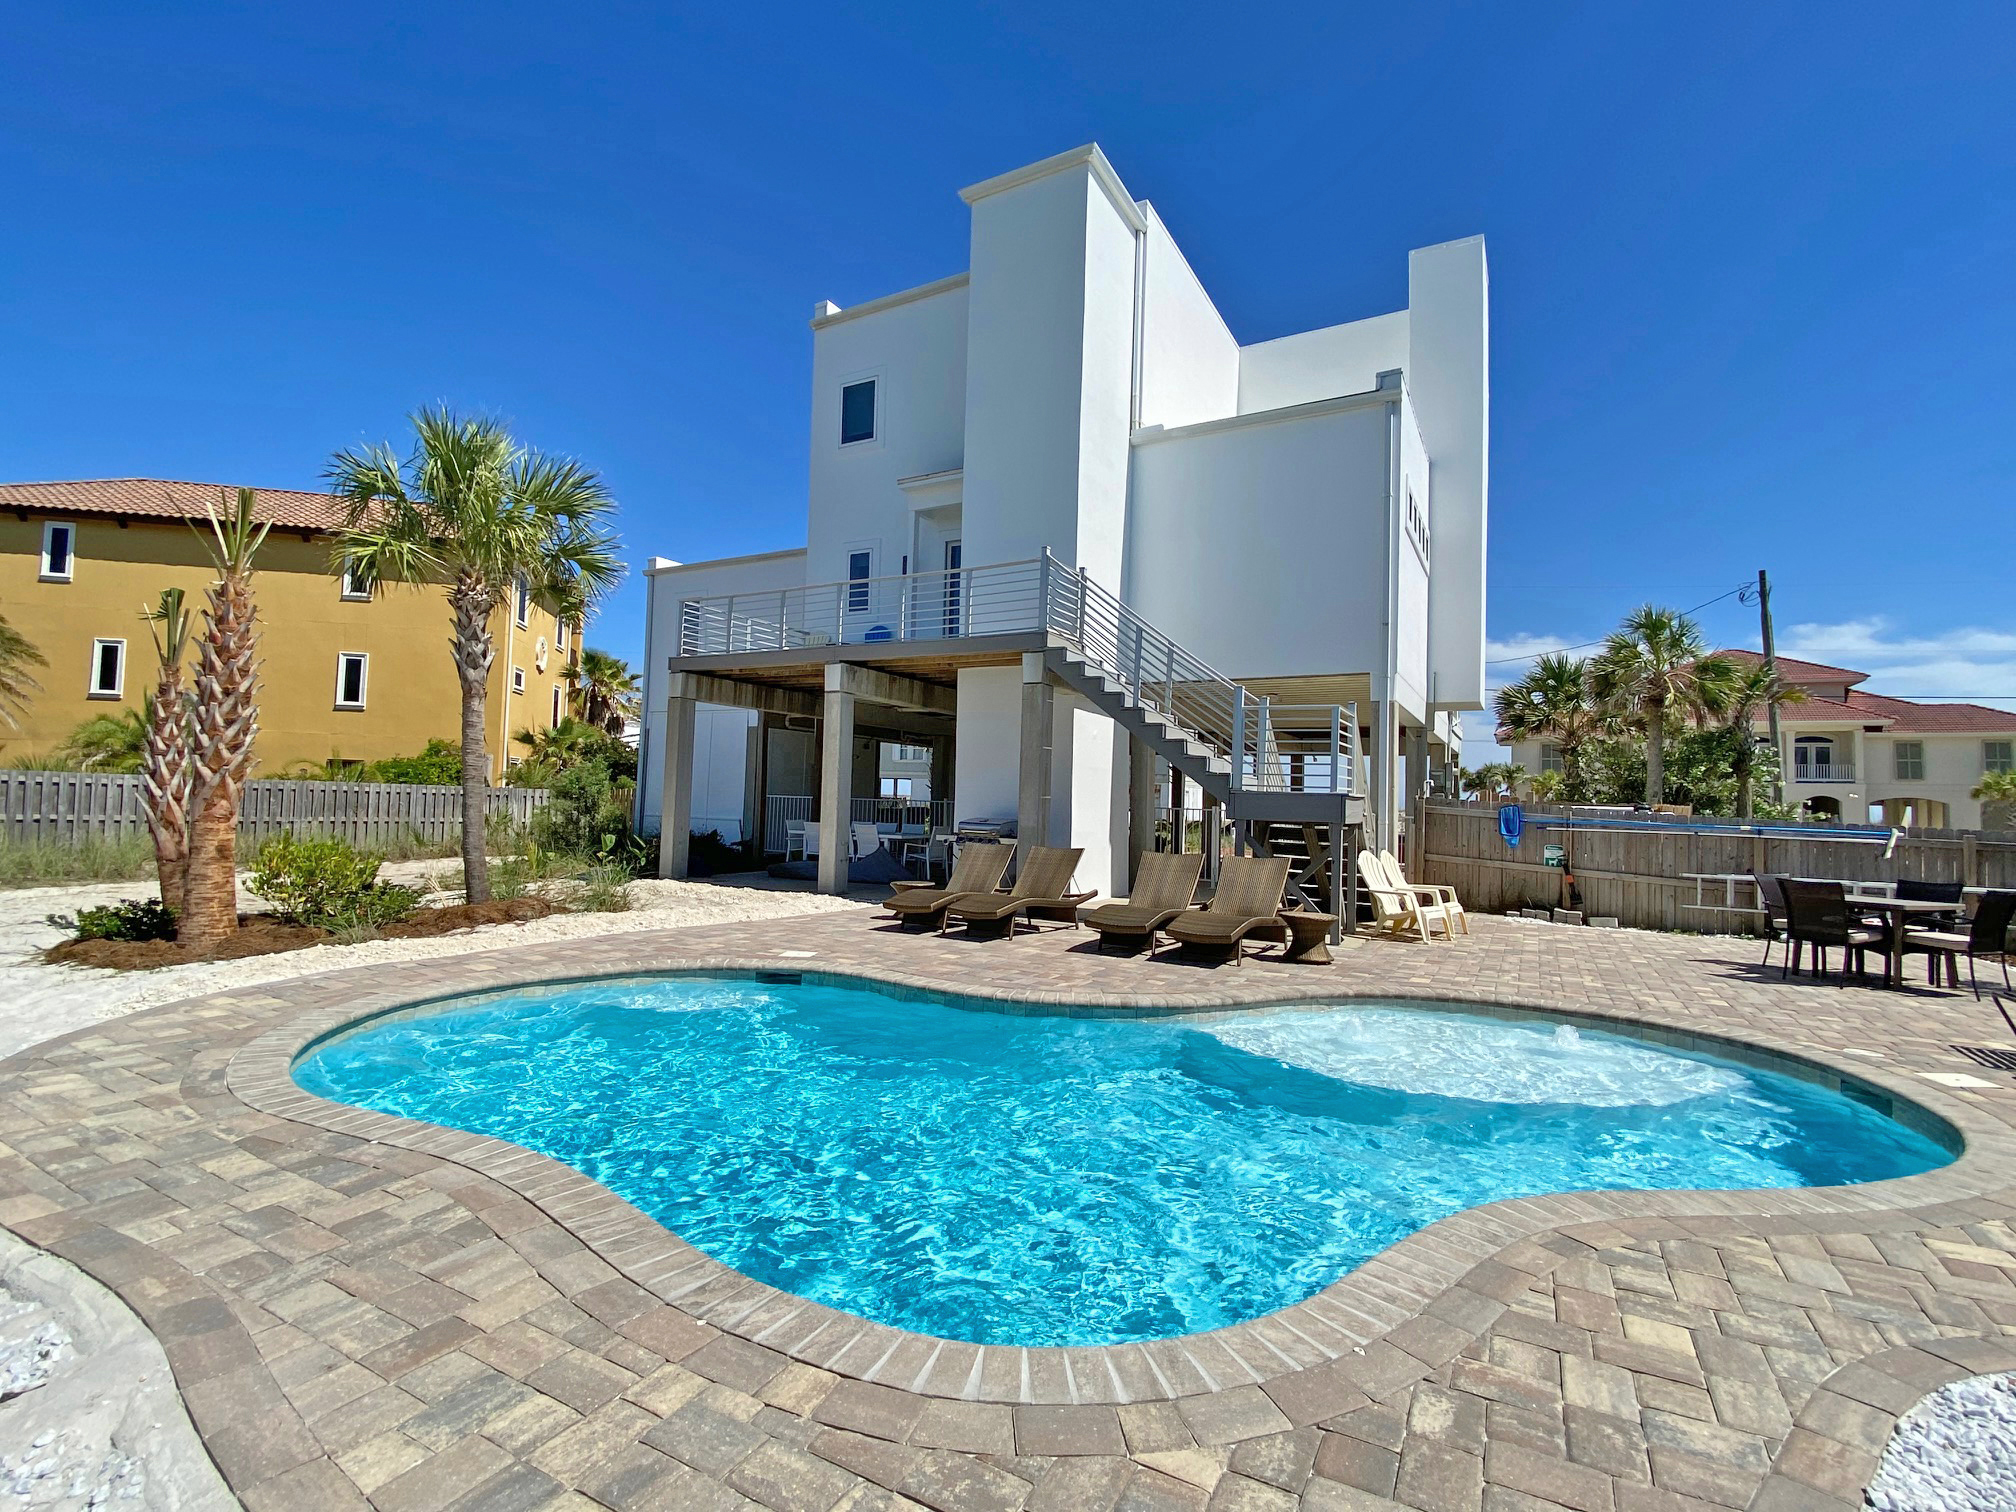 Ariola 1013 - Sunshine Beach House House / Cottage rental in Pensacola Beach House Rentals in Pensacola Beach Florida - #3